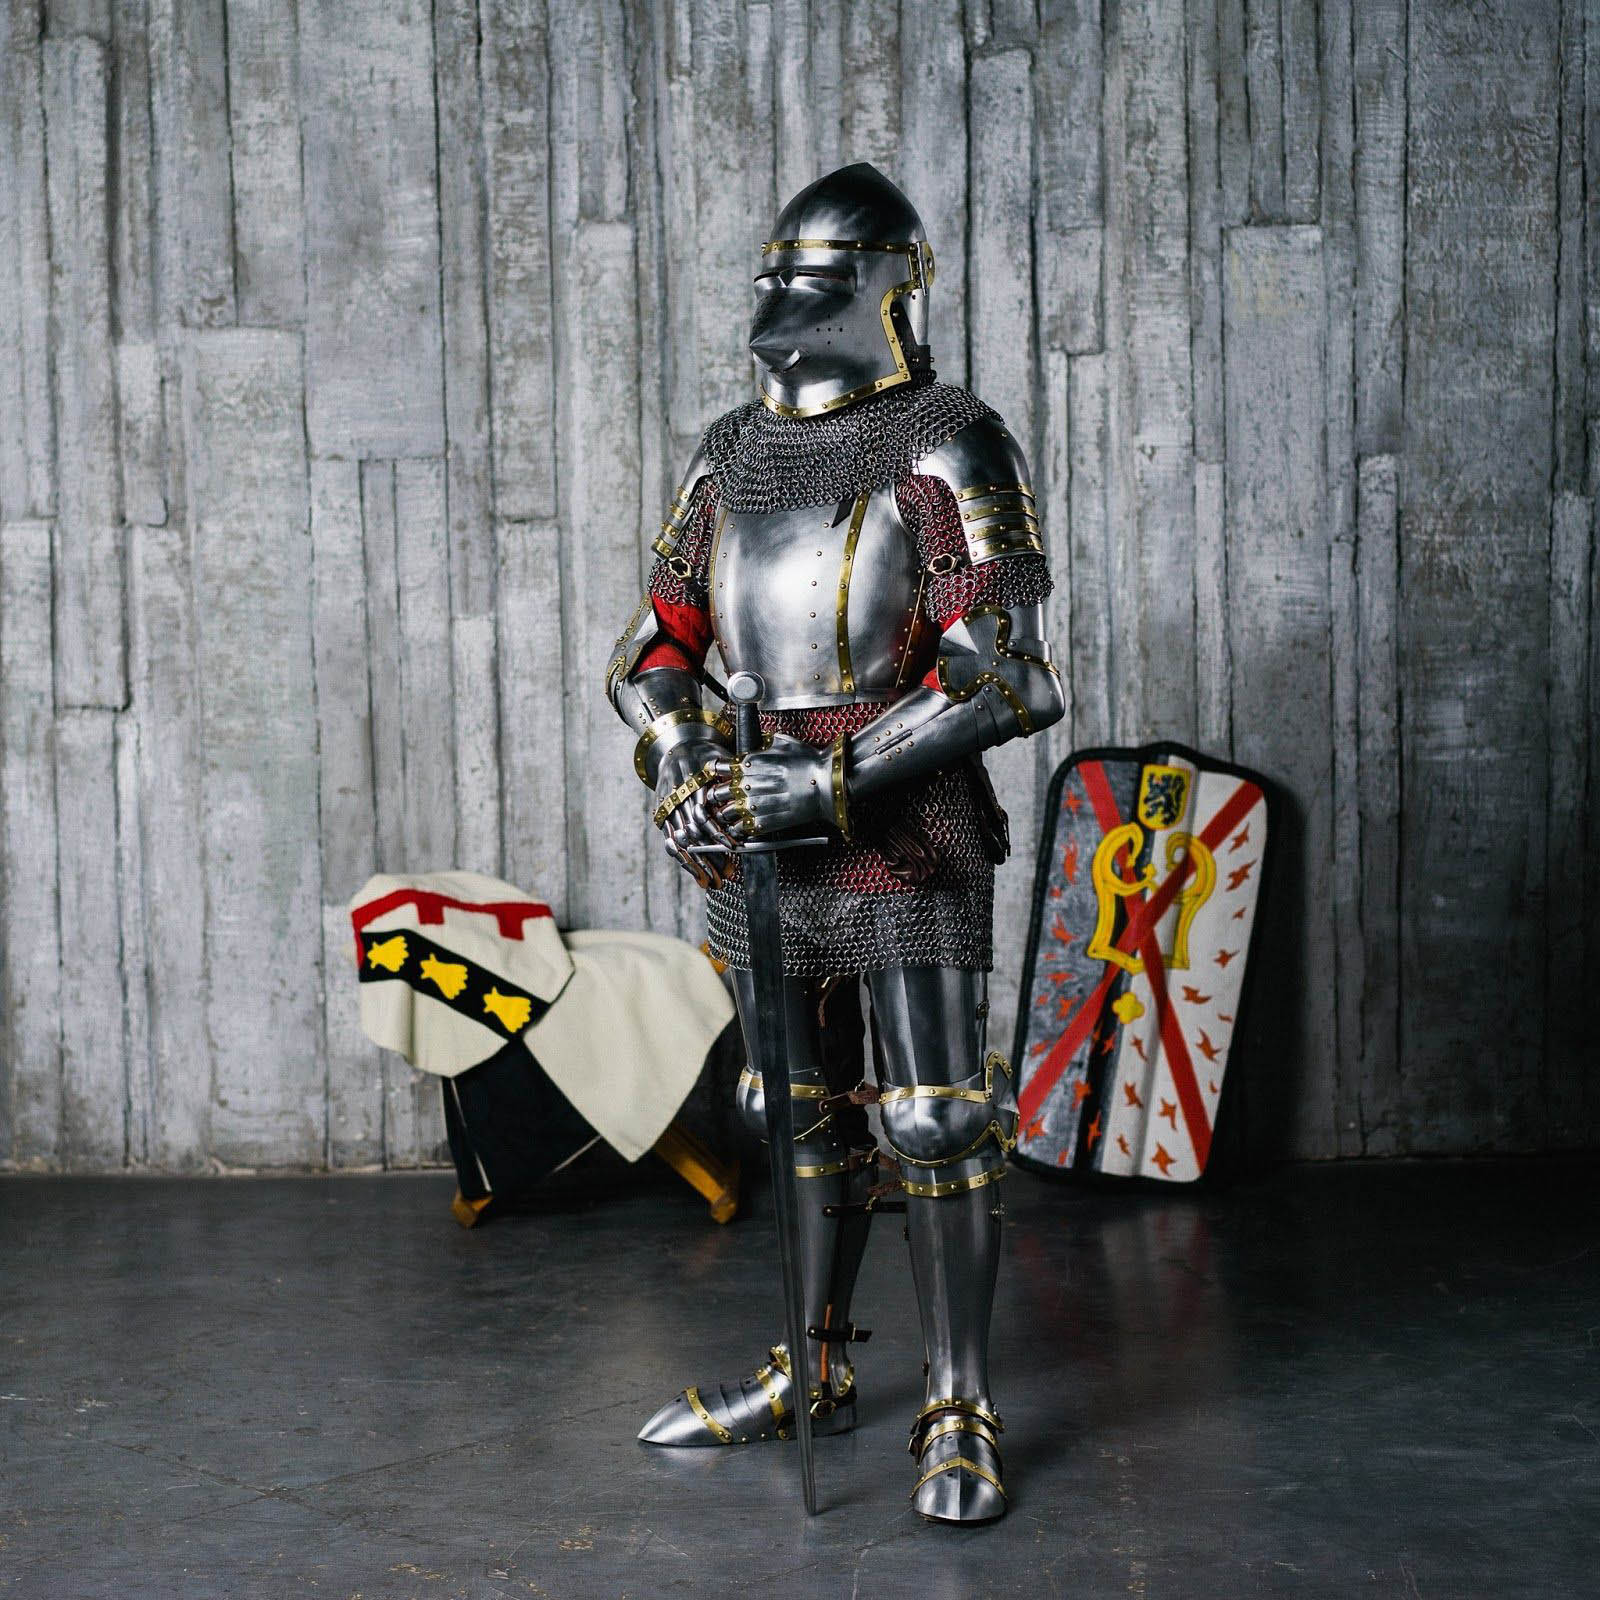 Churburg-style armour of the XIV century